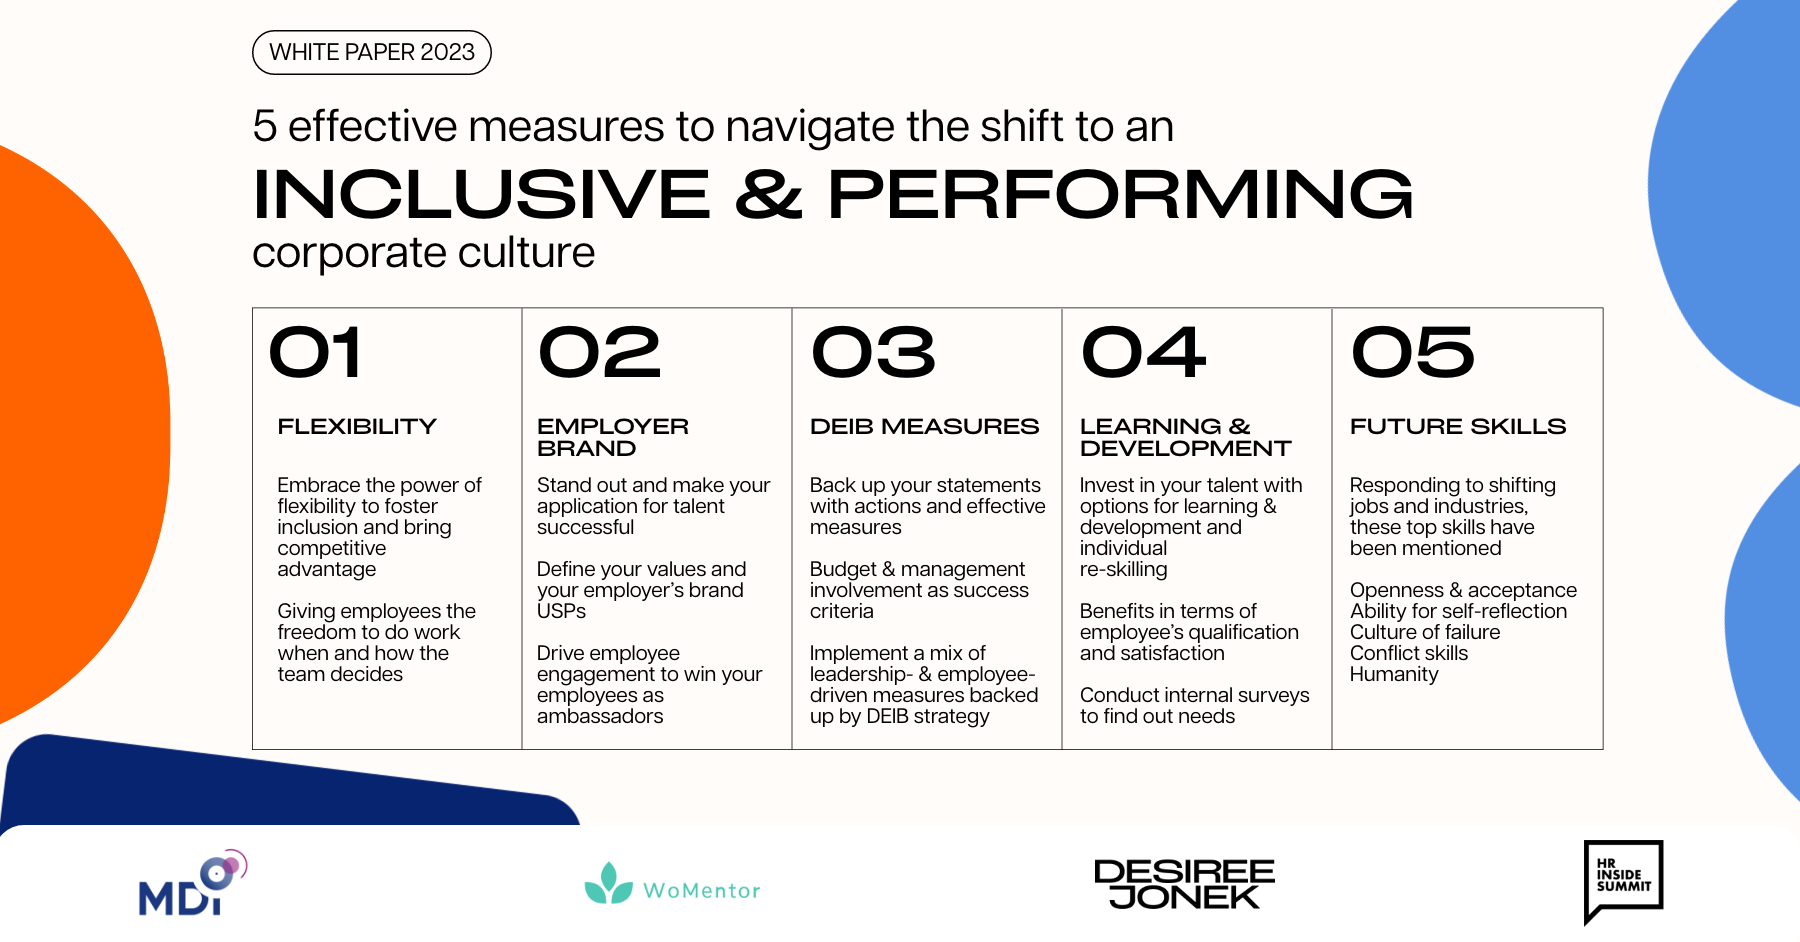 5 measures for an integrative corporate culture